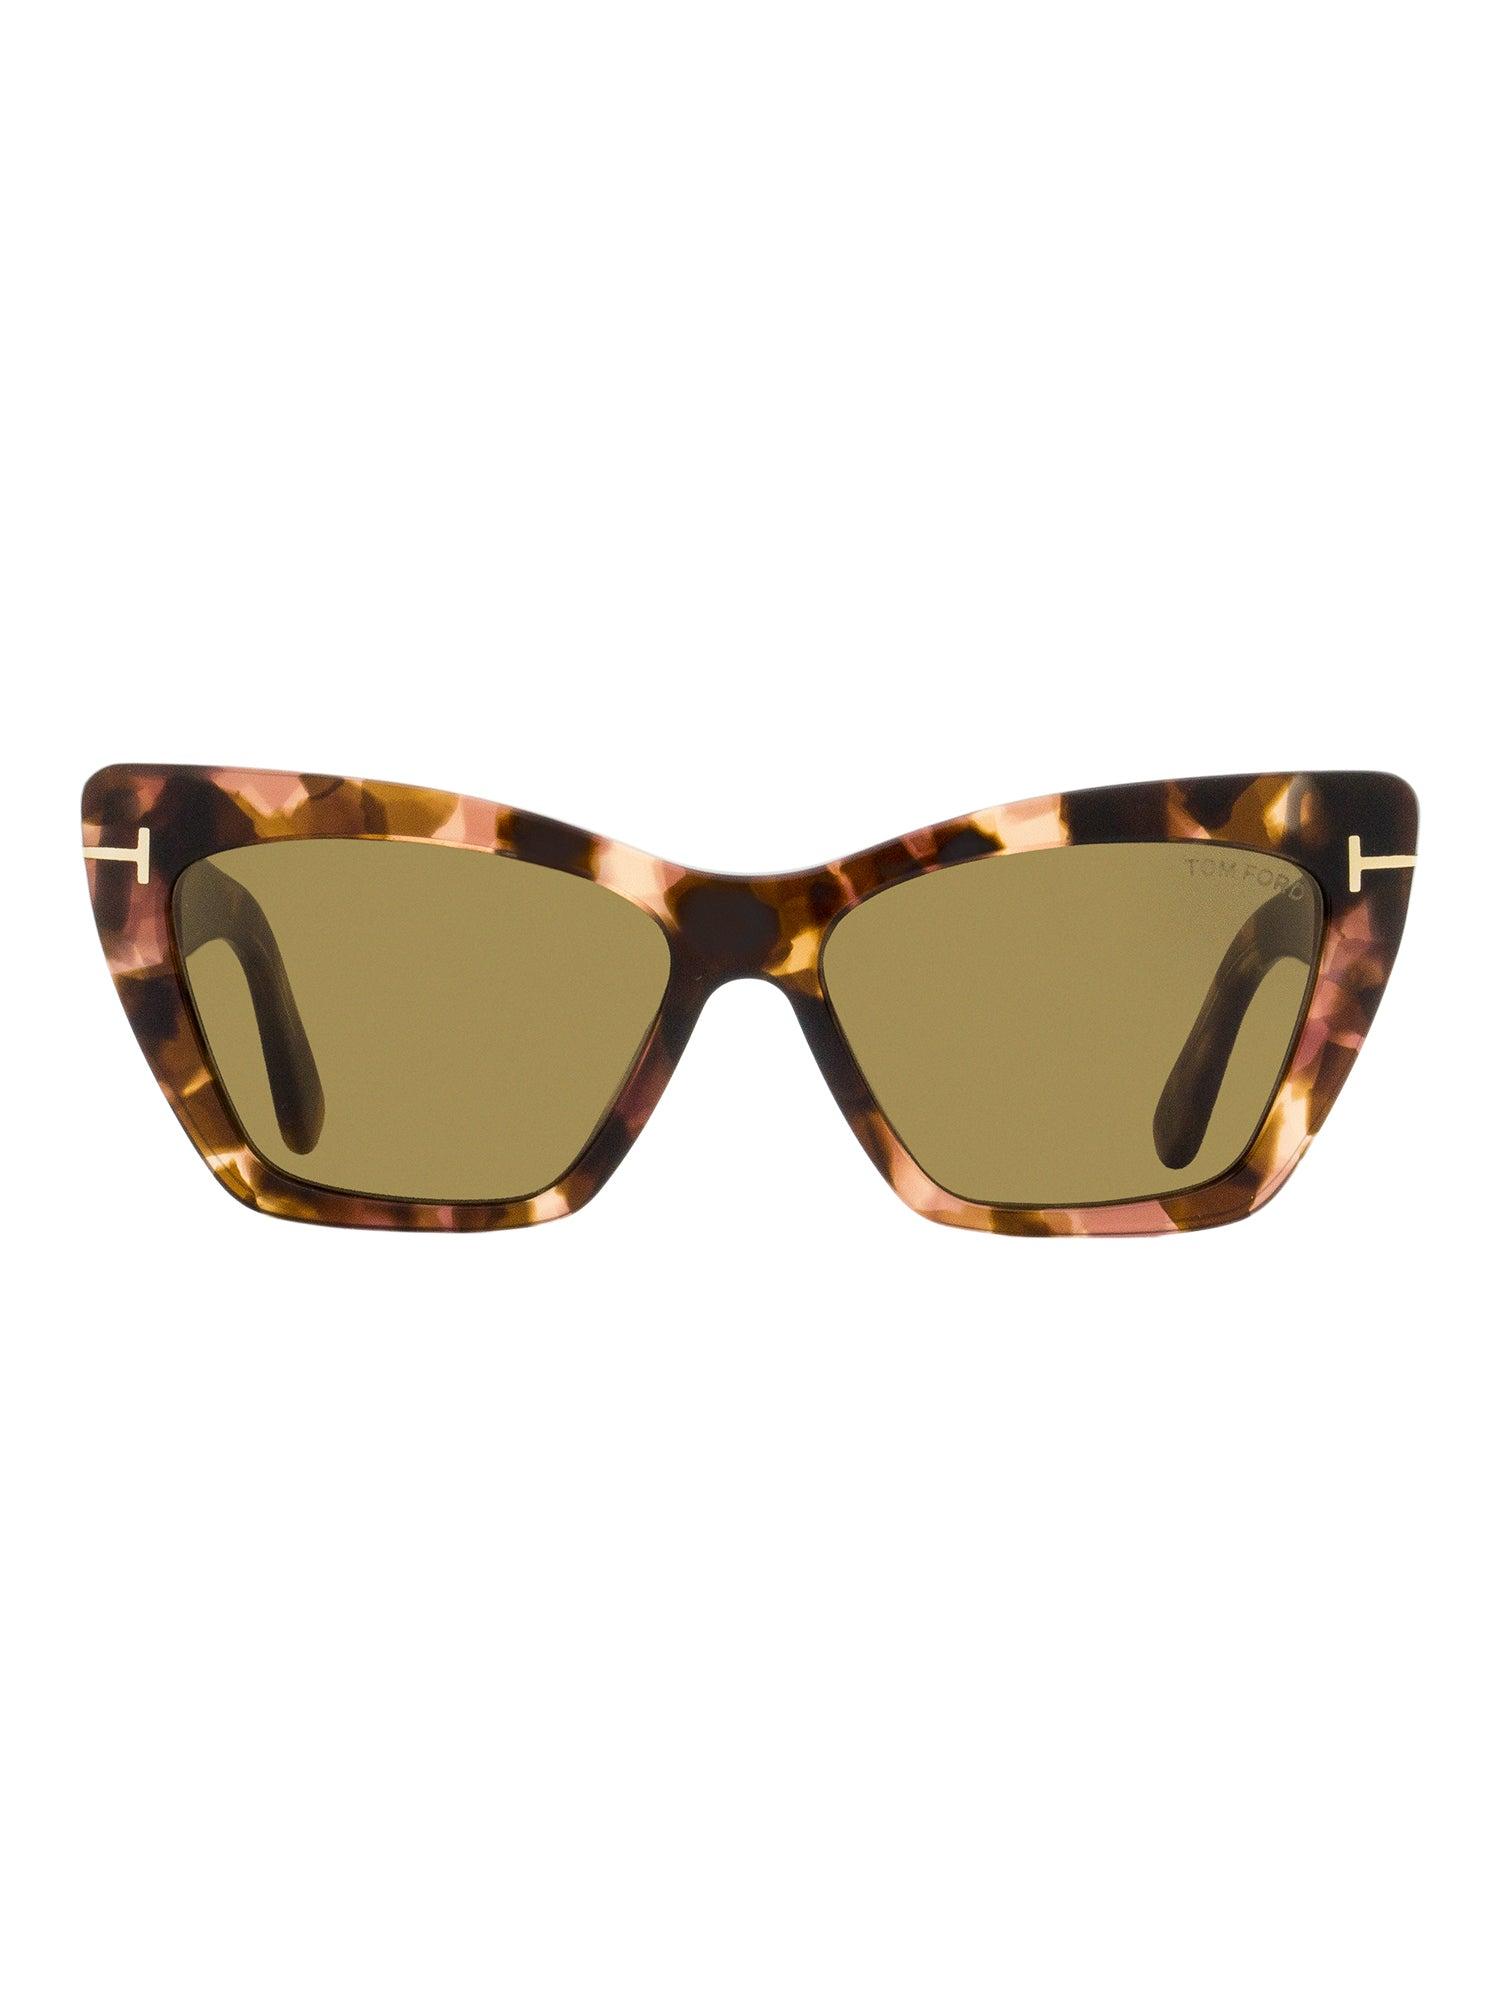 Tom Ford Cat Eye Sunglasses Tf871 Wyatt Rose Havana 56mm in Brown | Lyst